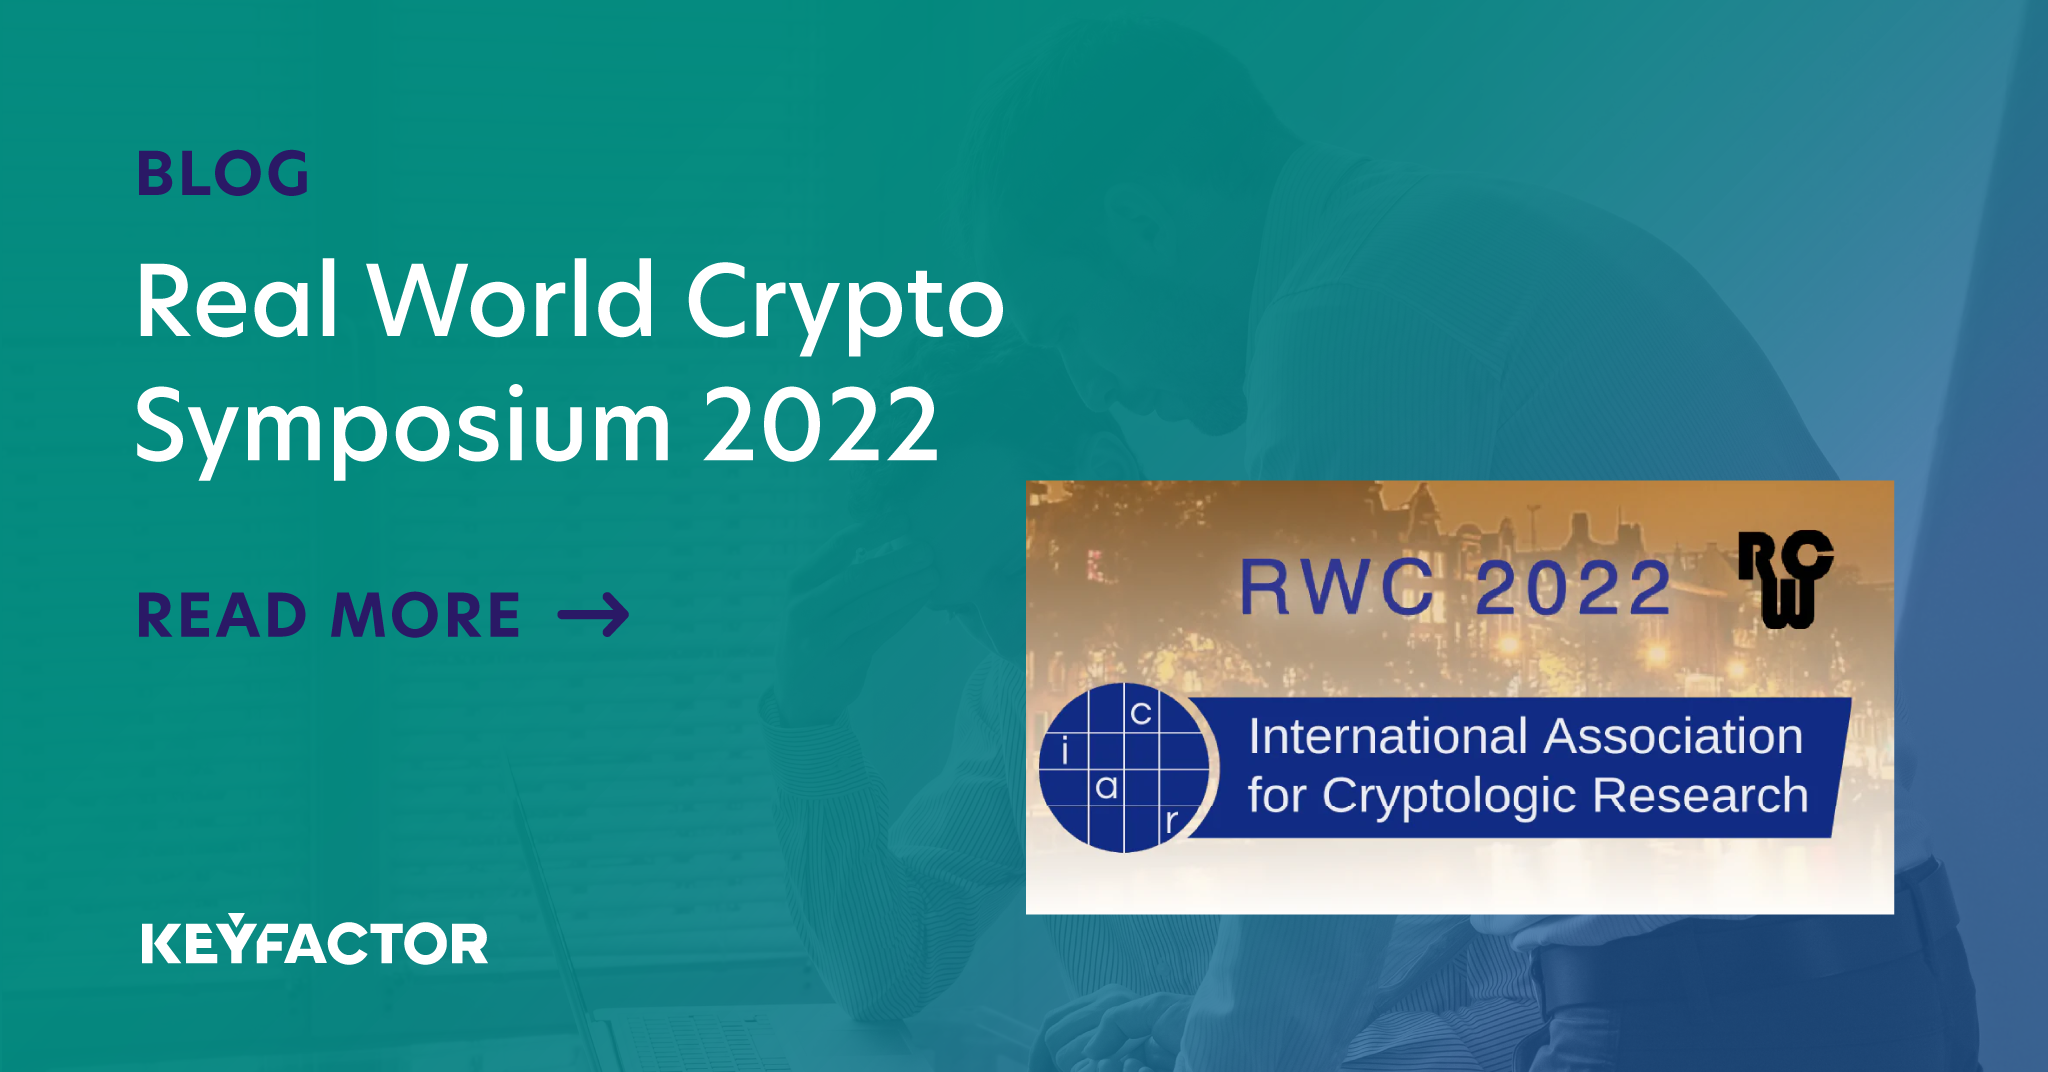 Three key takeaways from the Real World Crypto Symposium 2022